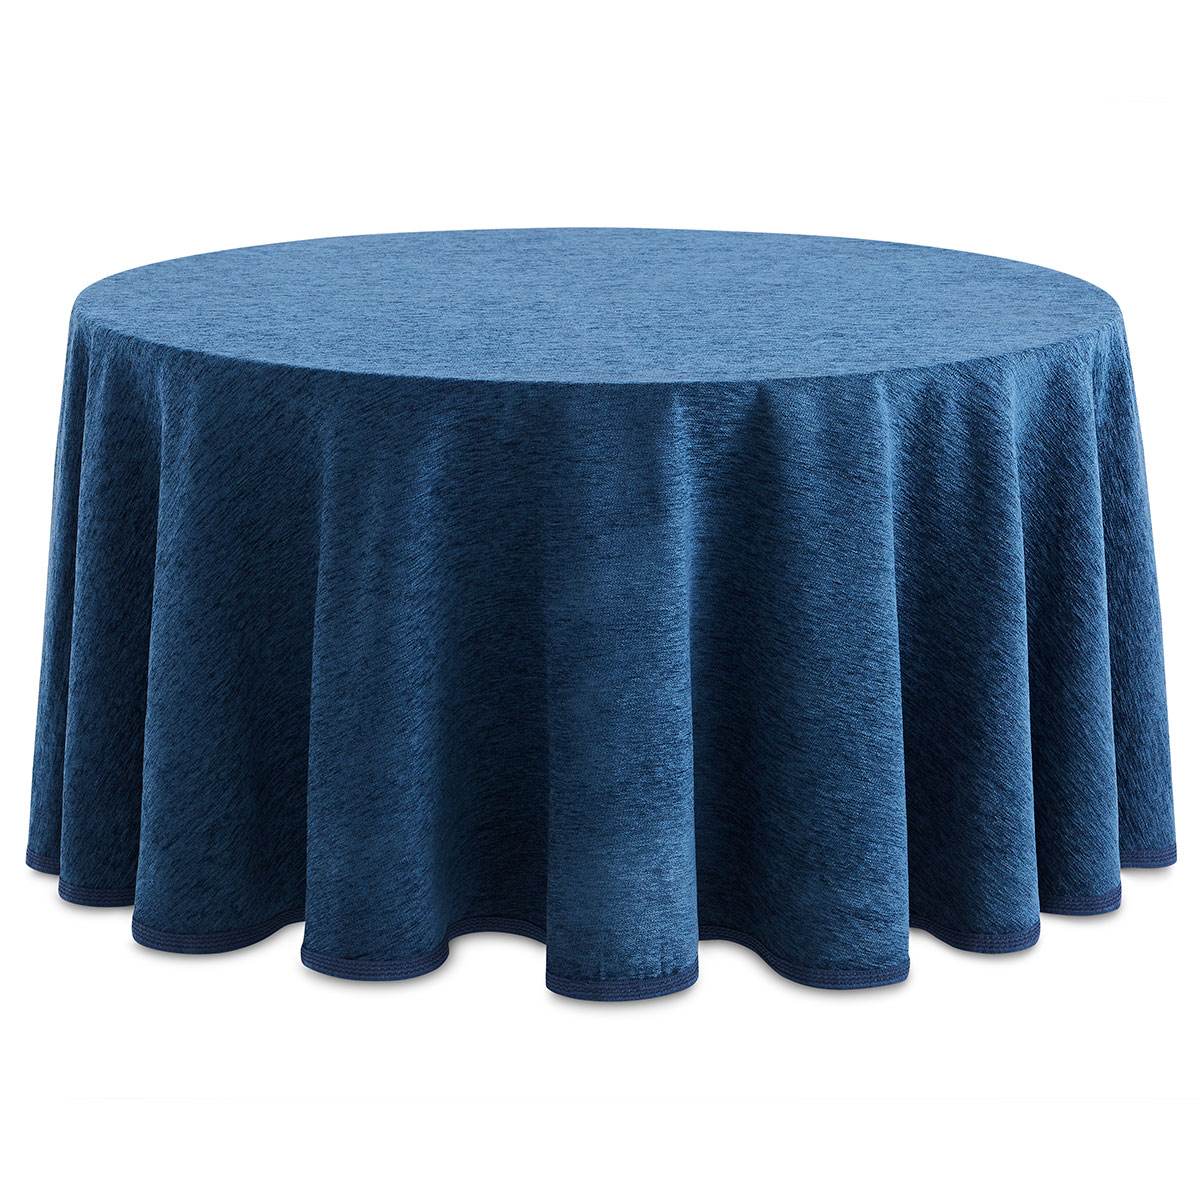 Acomoda Textil – Mantel Antimanchas Rectangular de Hule al Corte. Mantel  Liso Elegante, Impermeable, Resistente y Lavable